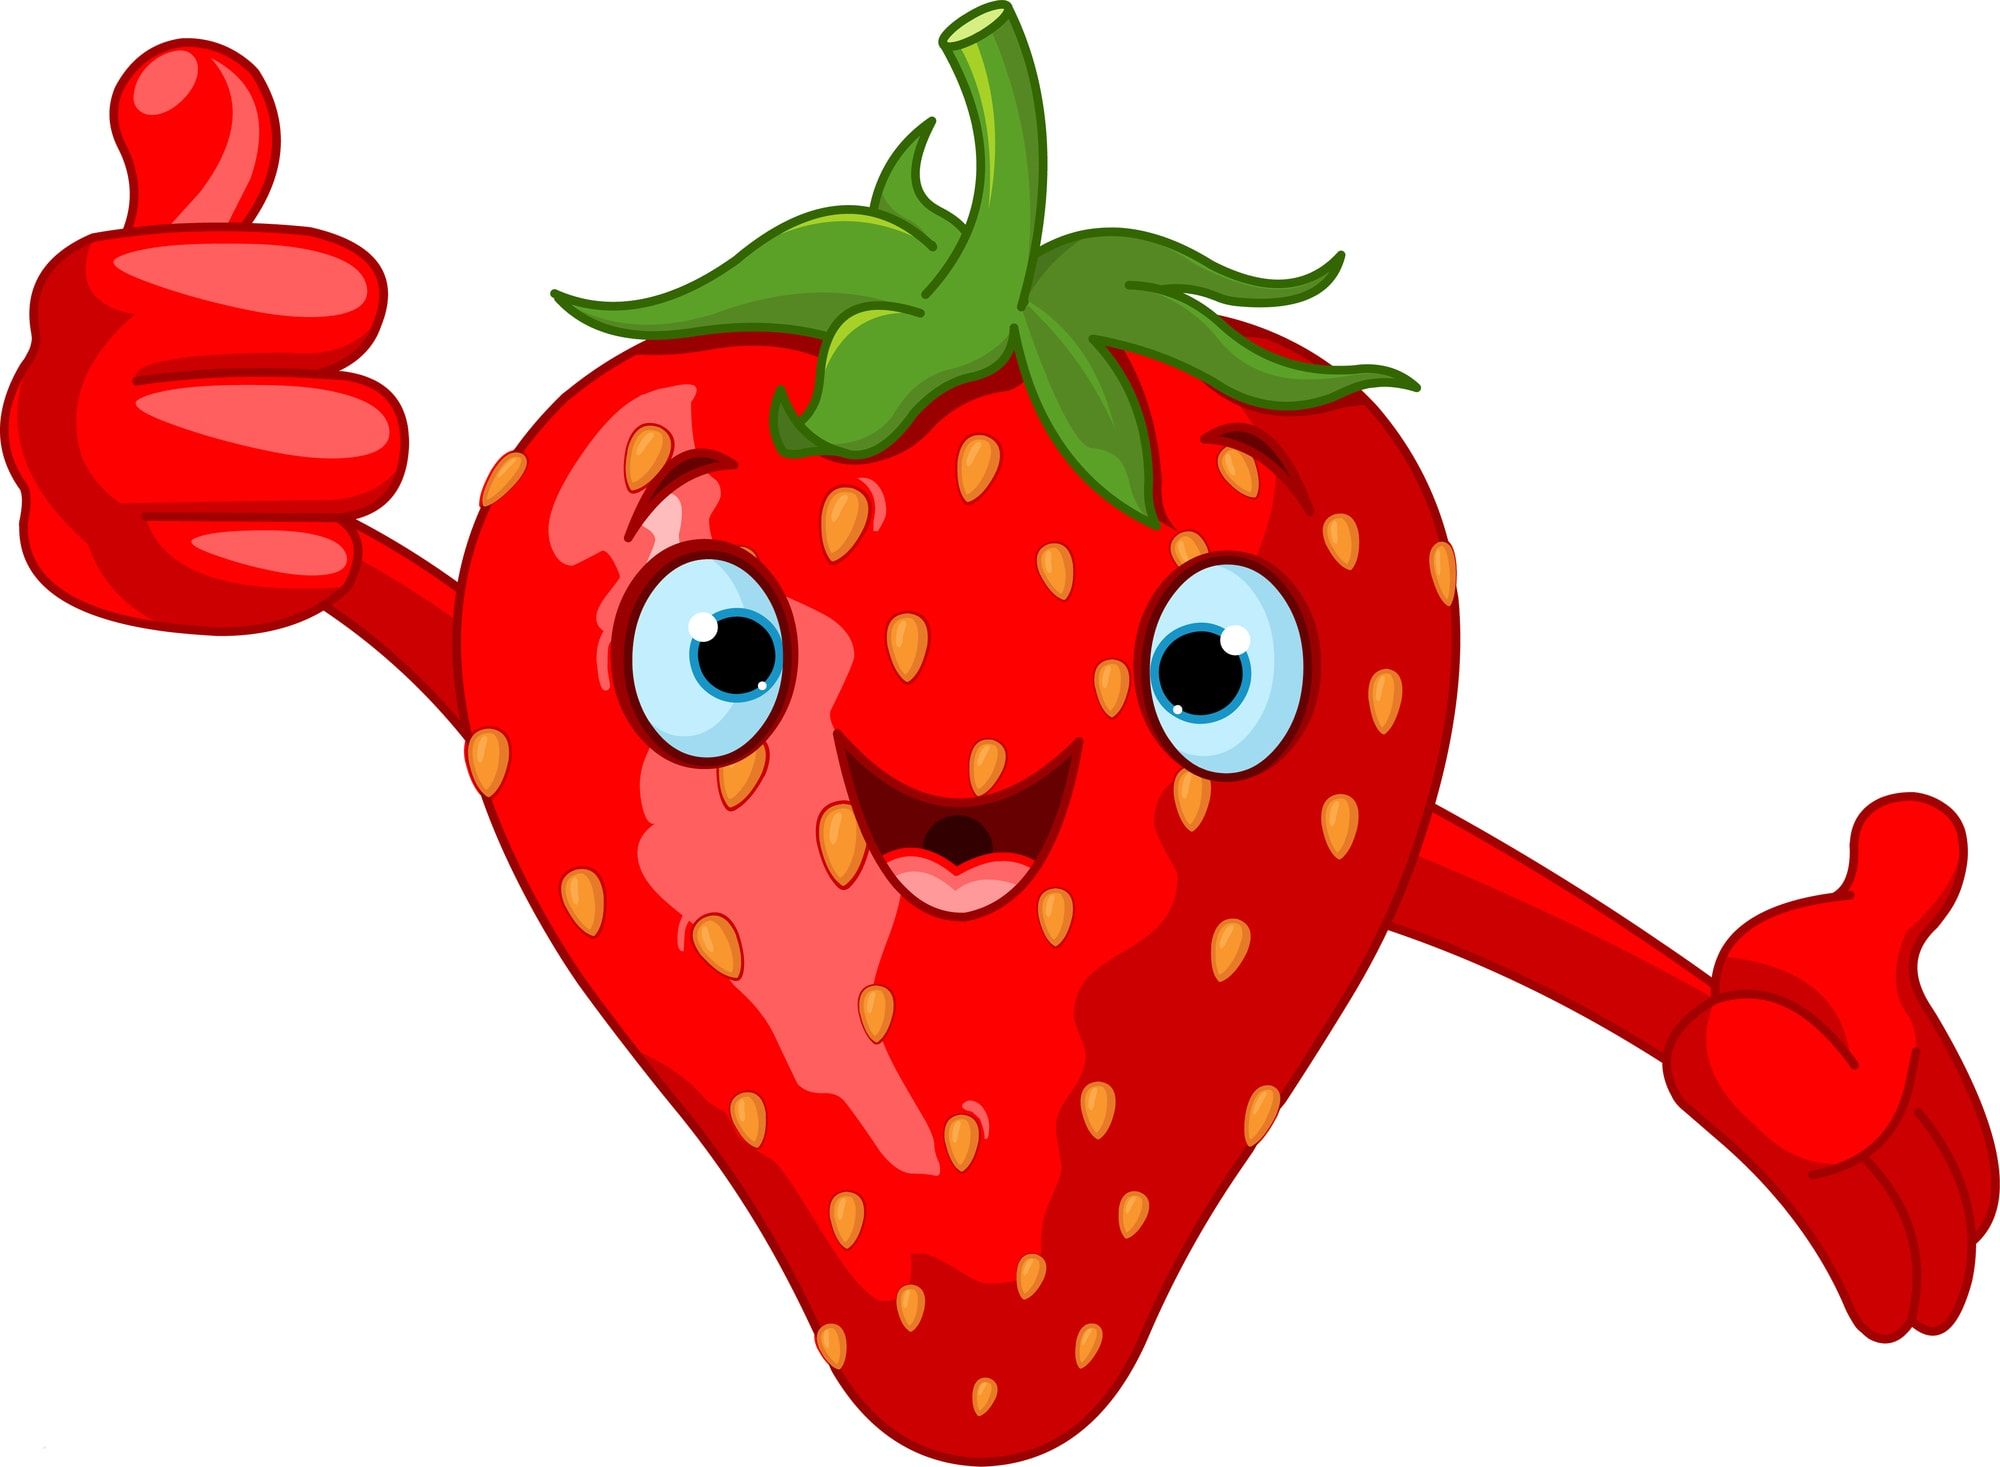 Illustration of Cheerful Cartoon Strawberry character